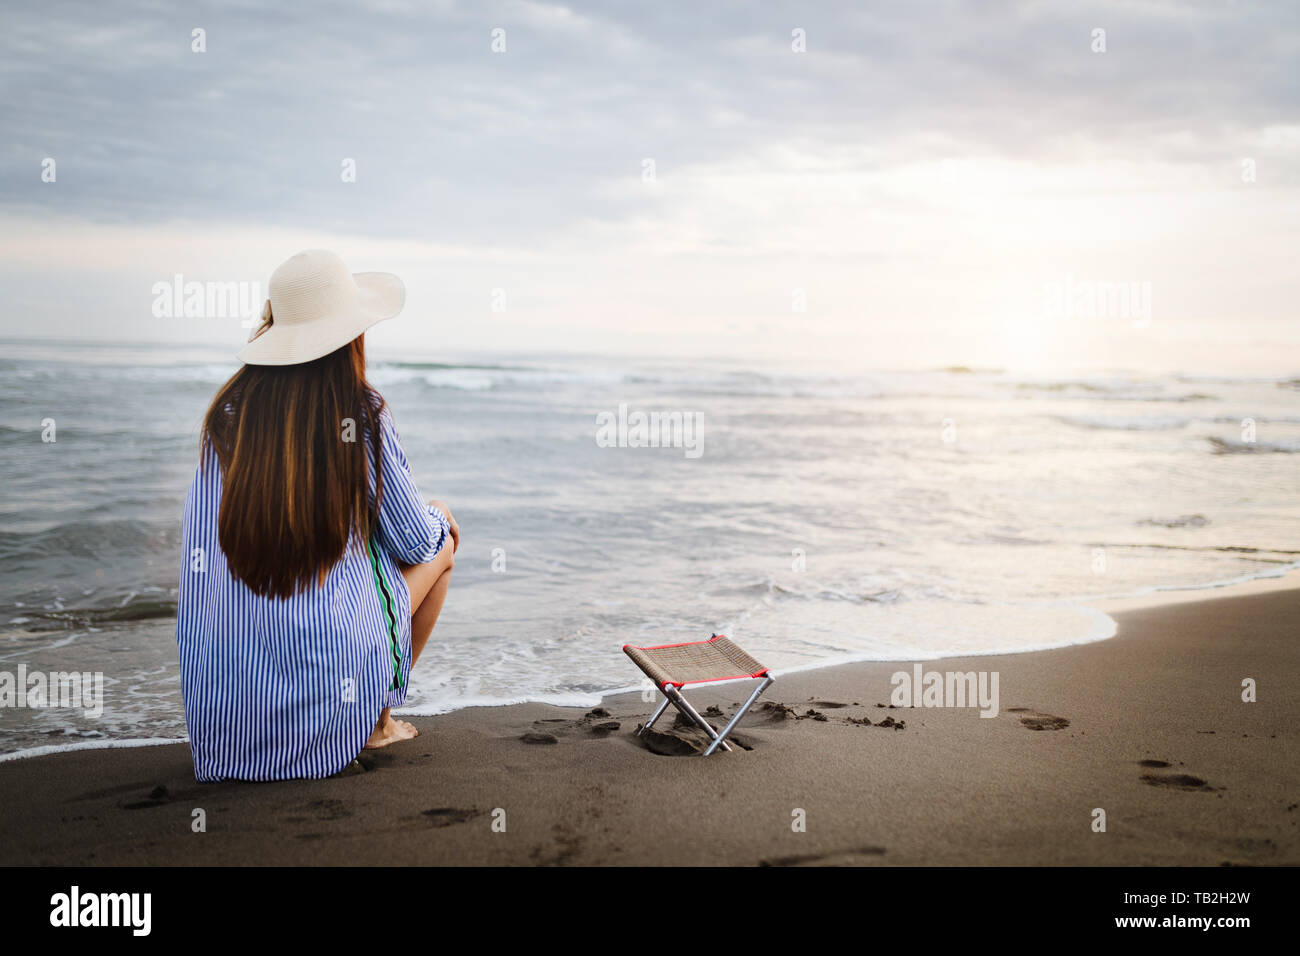 Calm woman sitting alone on a sand evening beach Stock Photo